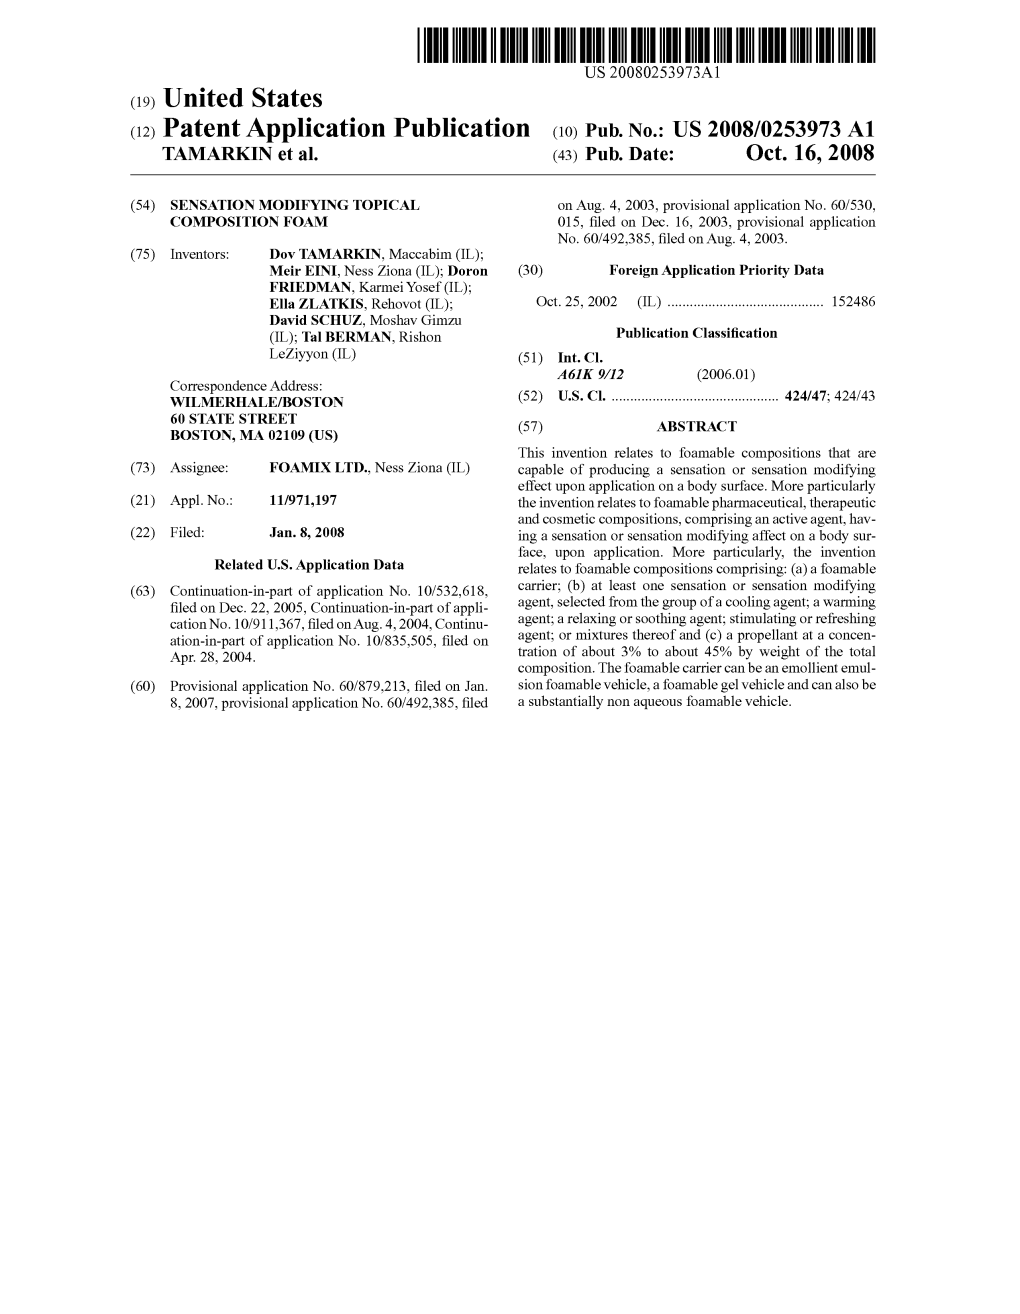 (12) Patent Application Publication (10) Pub. No.: US 2008/0253973 A1 TAMARKIN Et Al